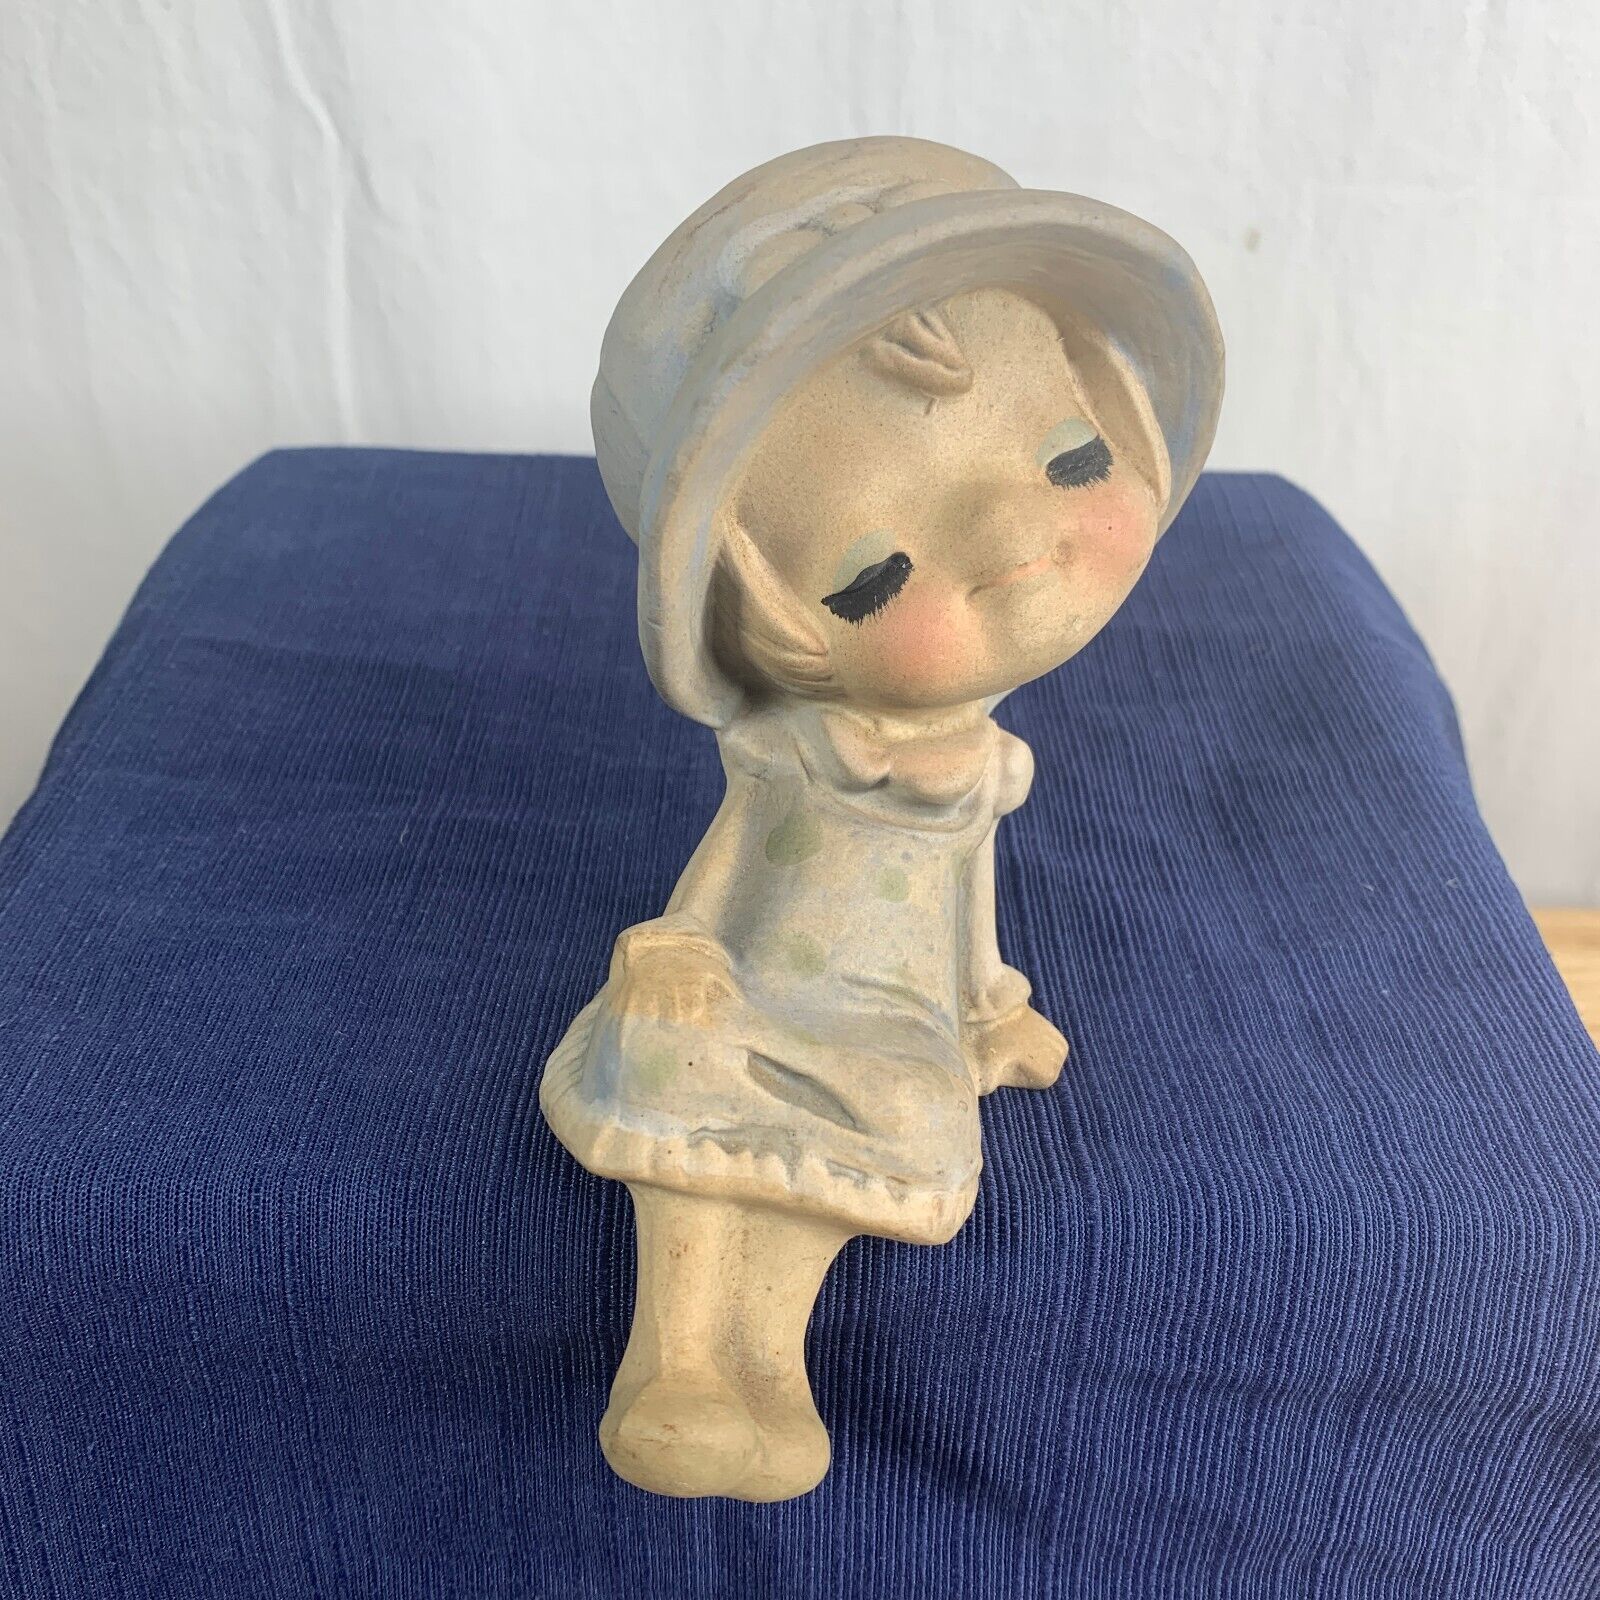 Vintage SETO CRAFT KK Original Ceramic Girl Figurine Shelf Sitter Made in Japan